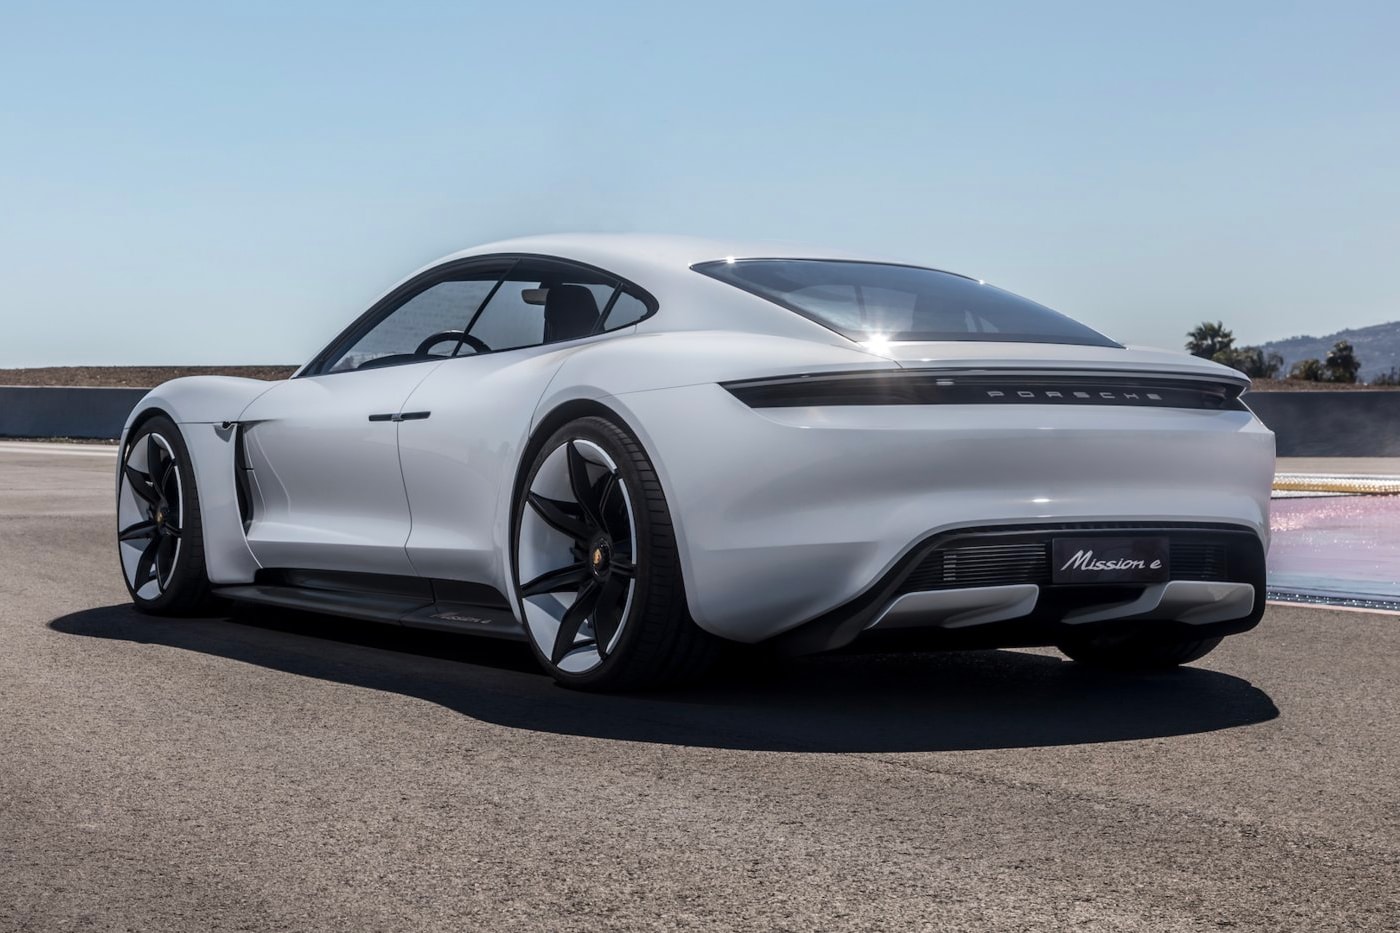 Porsche Taycan Electric Tesla Rival Waiting List Vehicle Car